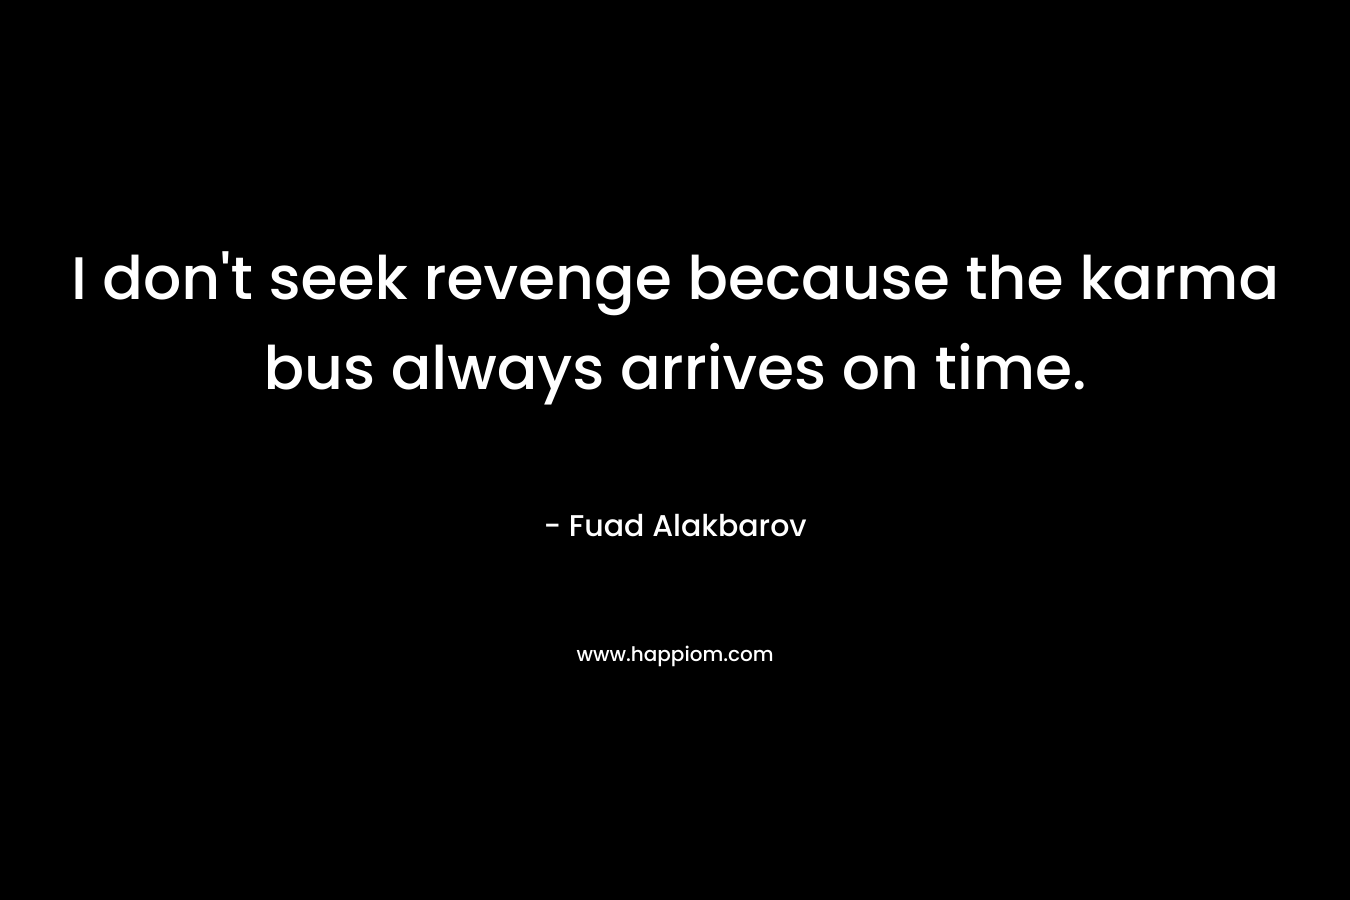 I don’t seek revenge because the karma bus always arrives on time. – Fuad Alakbarov